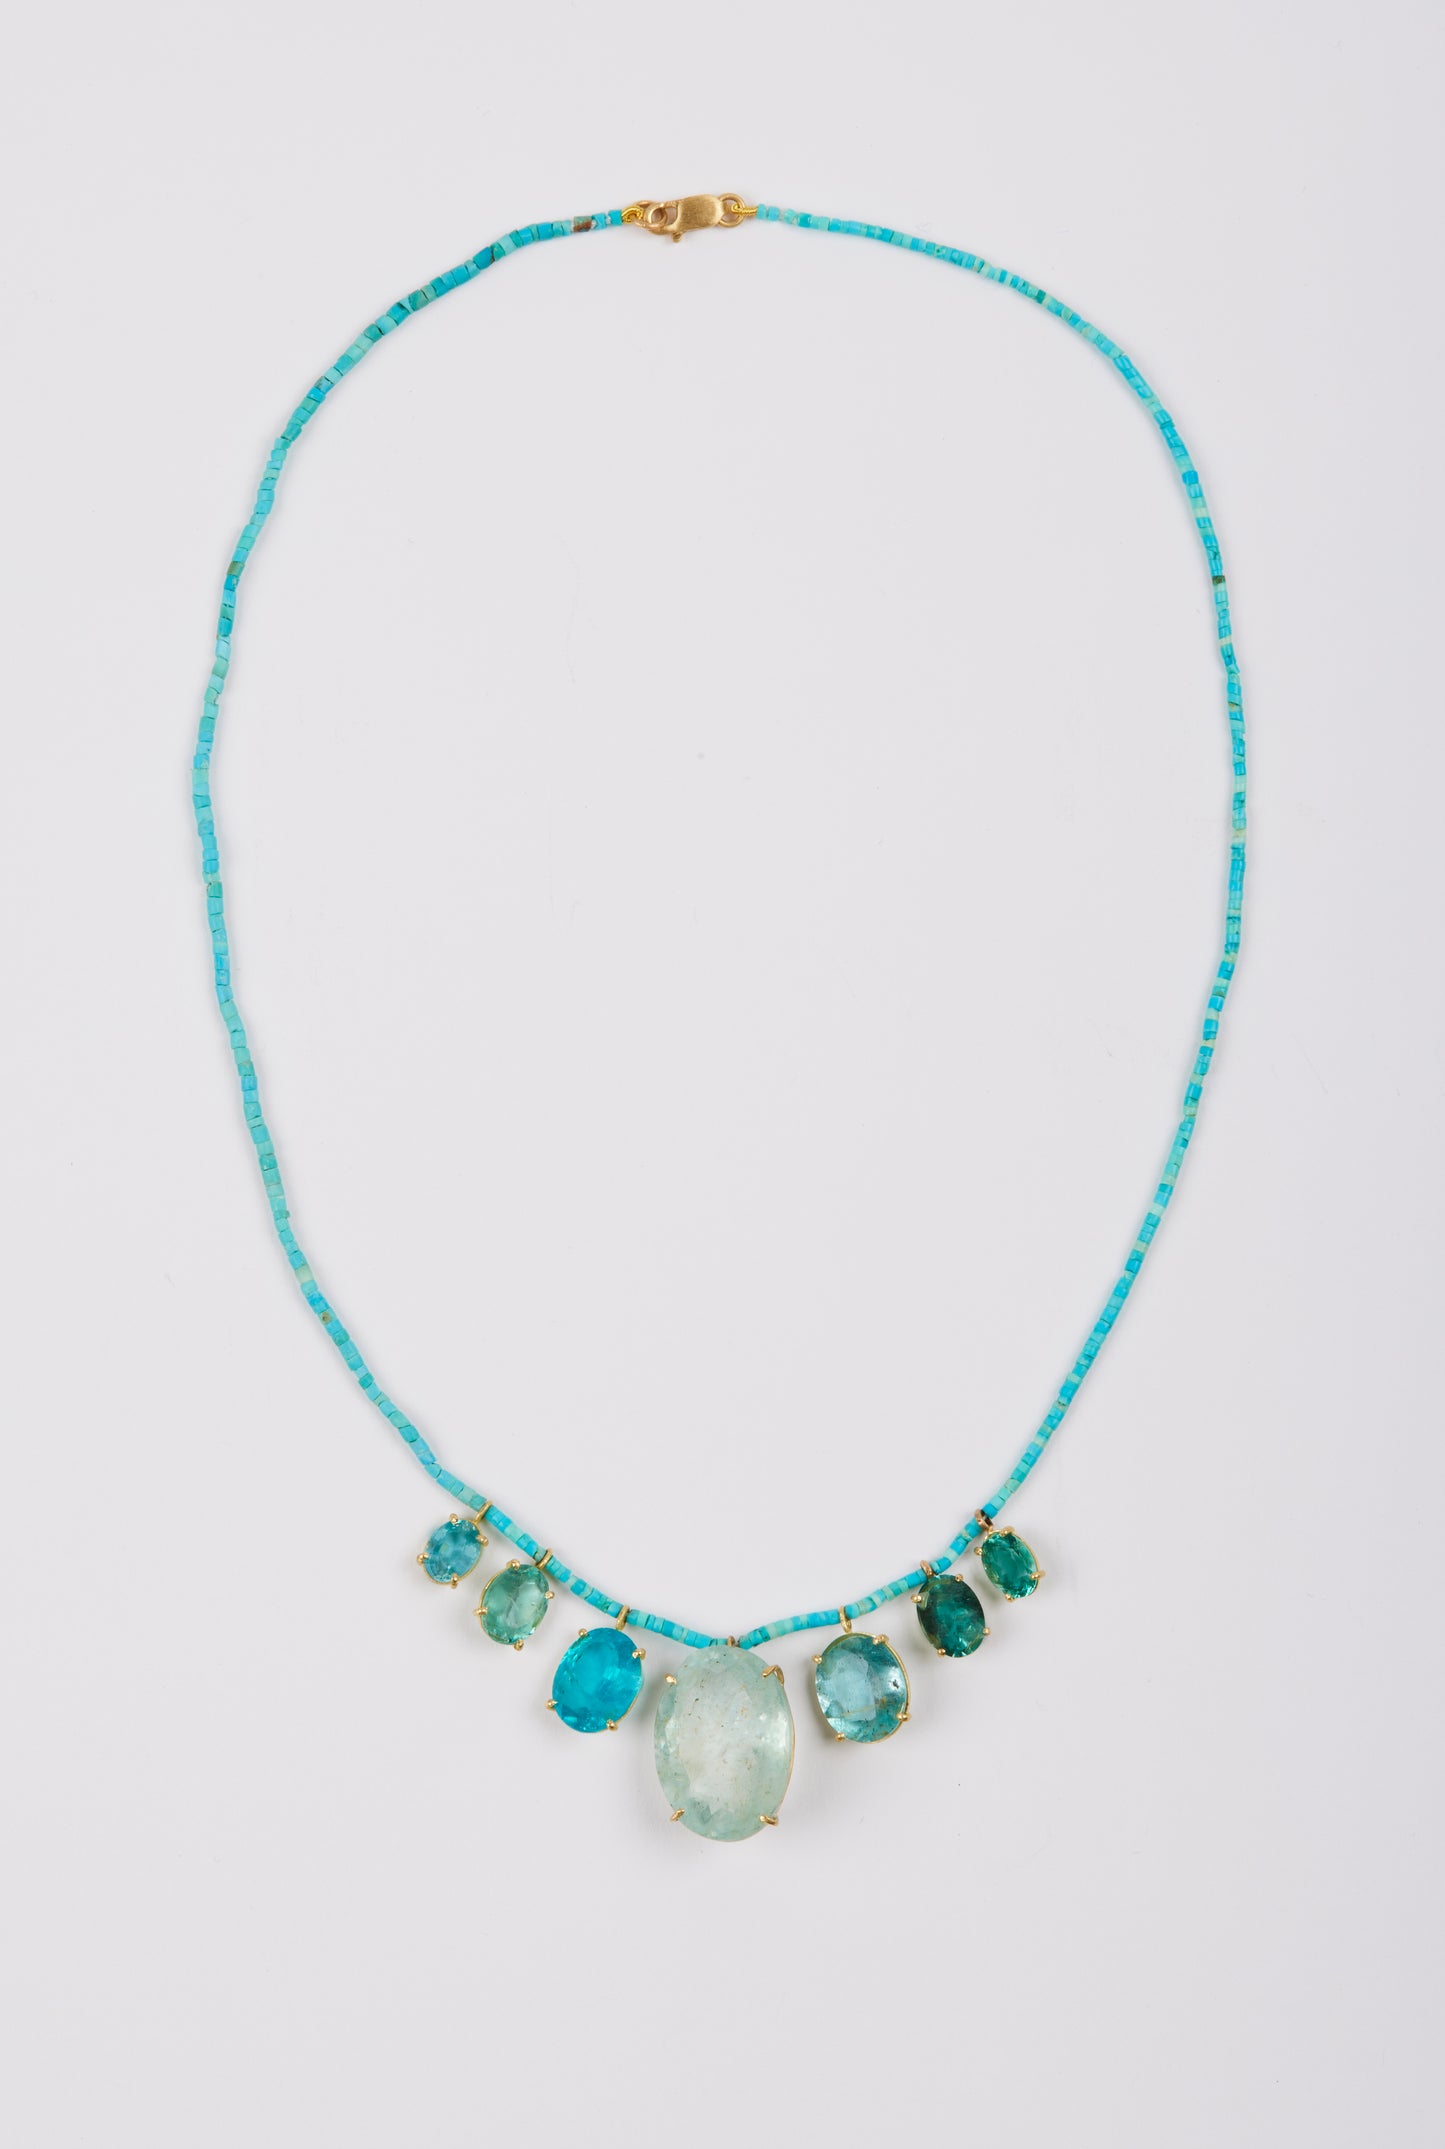 Turquoise Beads with Fluorite, Tourmaline and Aquamarines